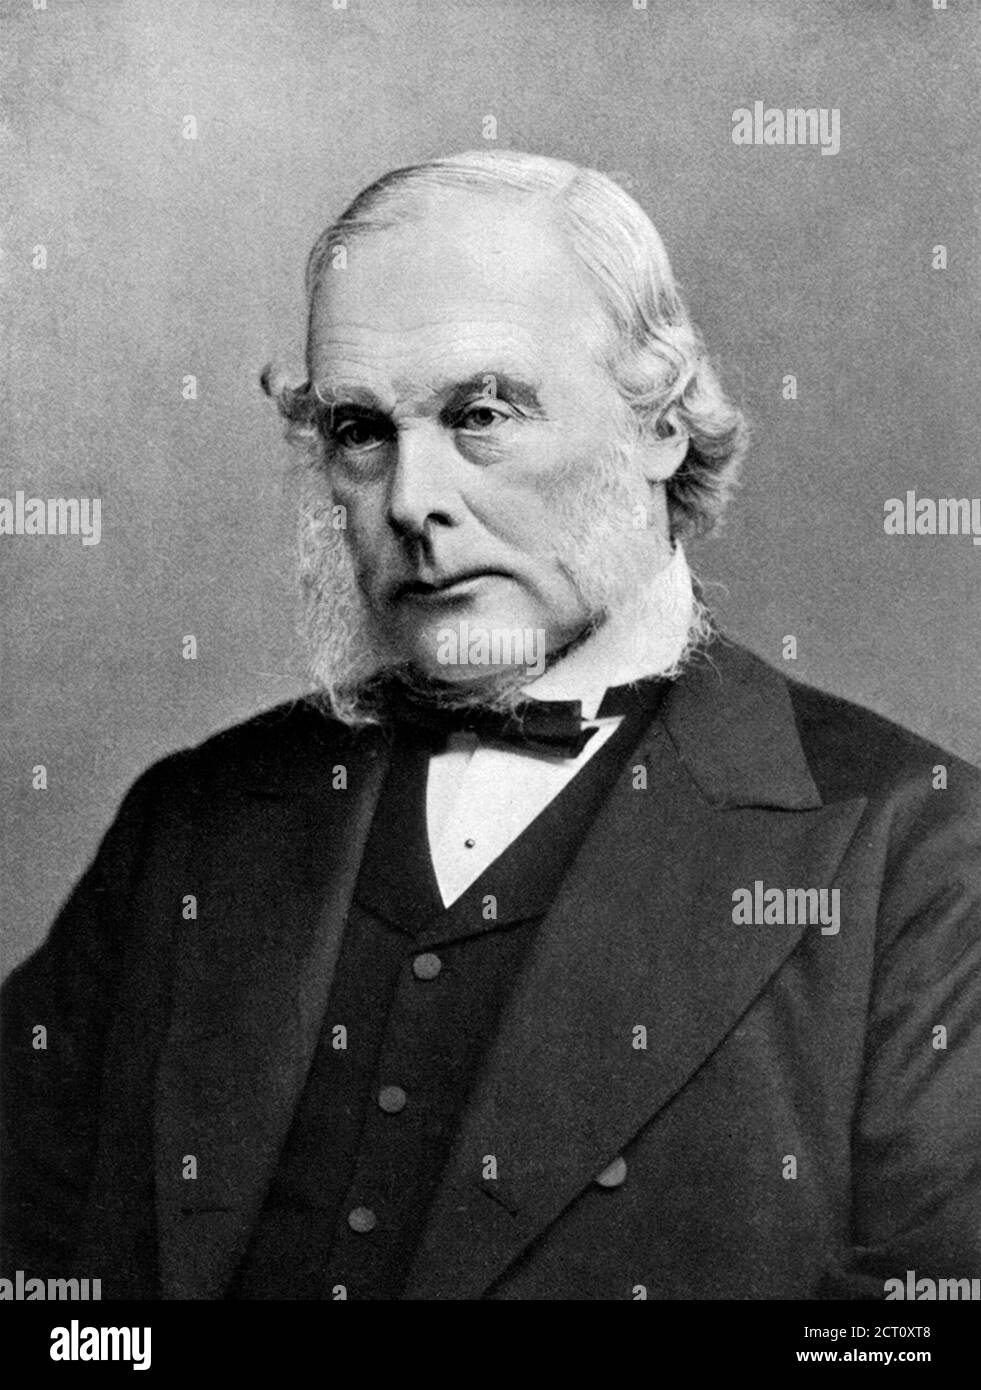 Joseph Lister. Portrait of the British surgeon, Joseph Lister, 1st Baron Lister (1827-1912), c.1902. Lister was a pioneer of antiseptic surgery. Stock Photo